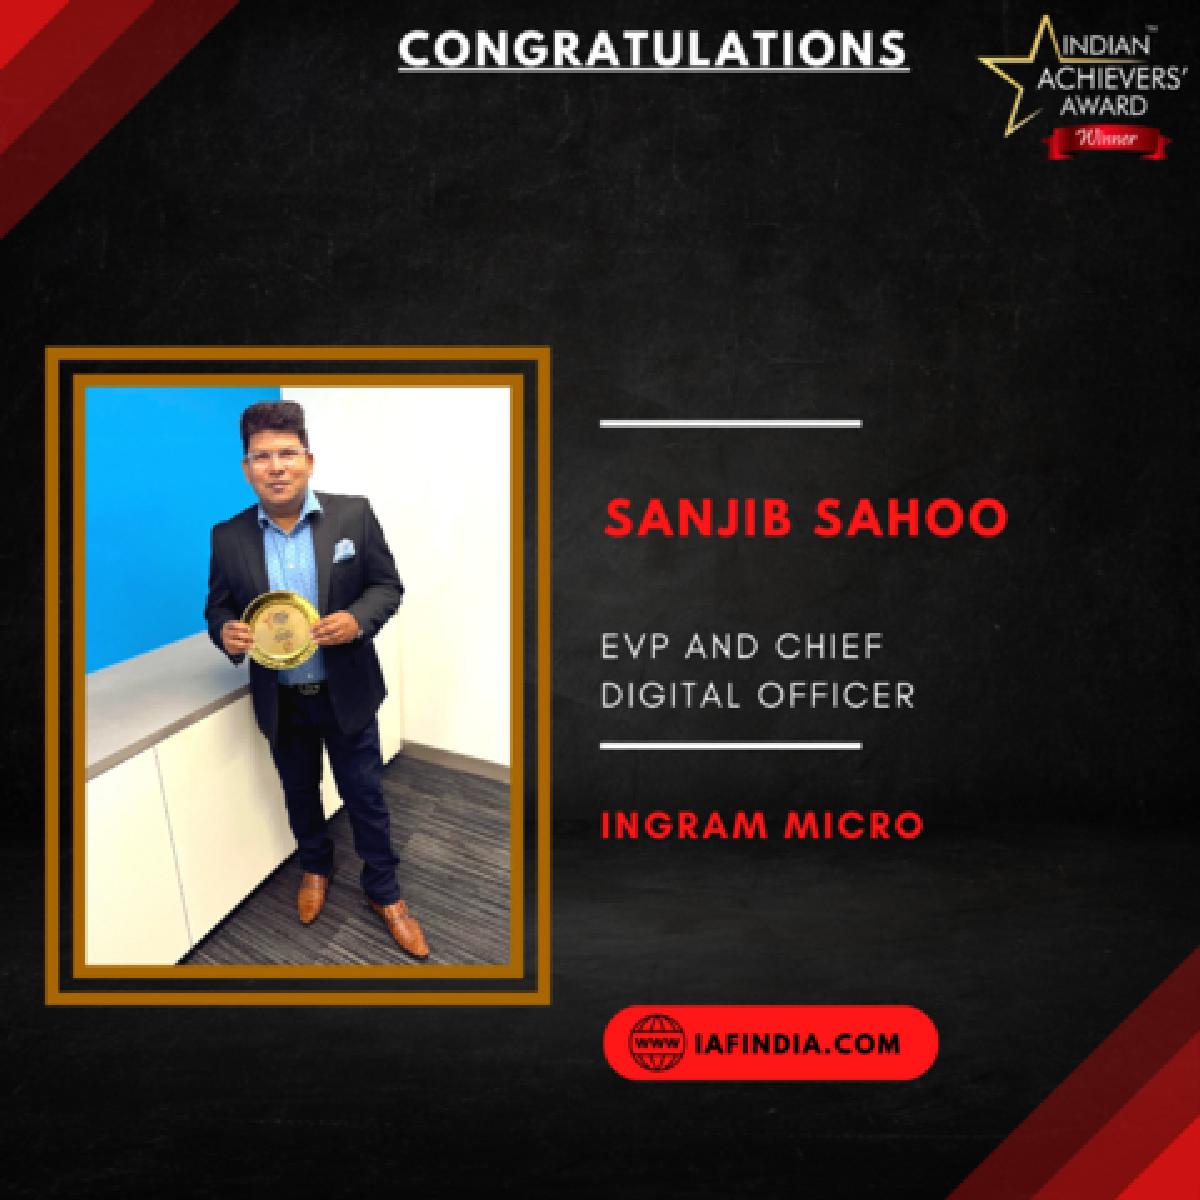 Ingram Micro is CDO Sanjib Sahoo Honored with the Prestigious India Achievers Award 2022 for Exceptional Digital Leadership